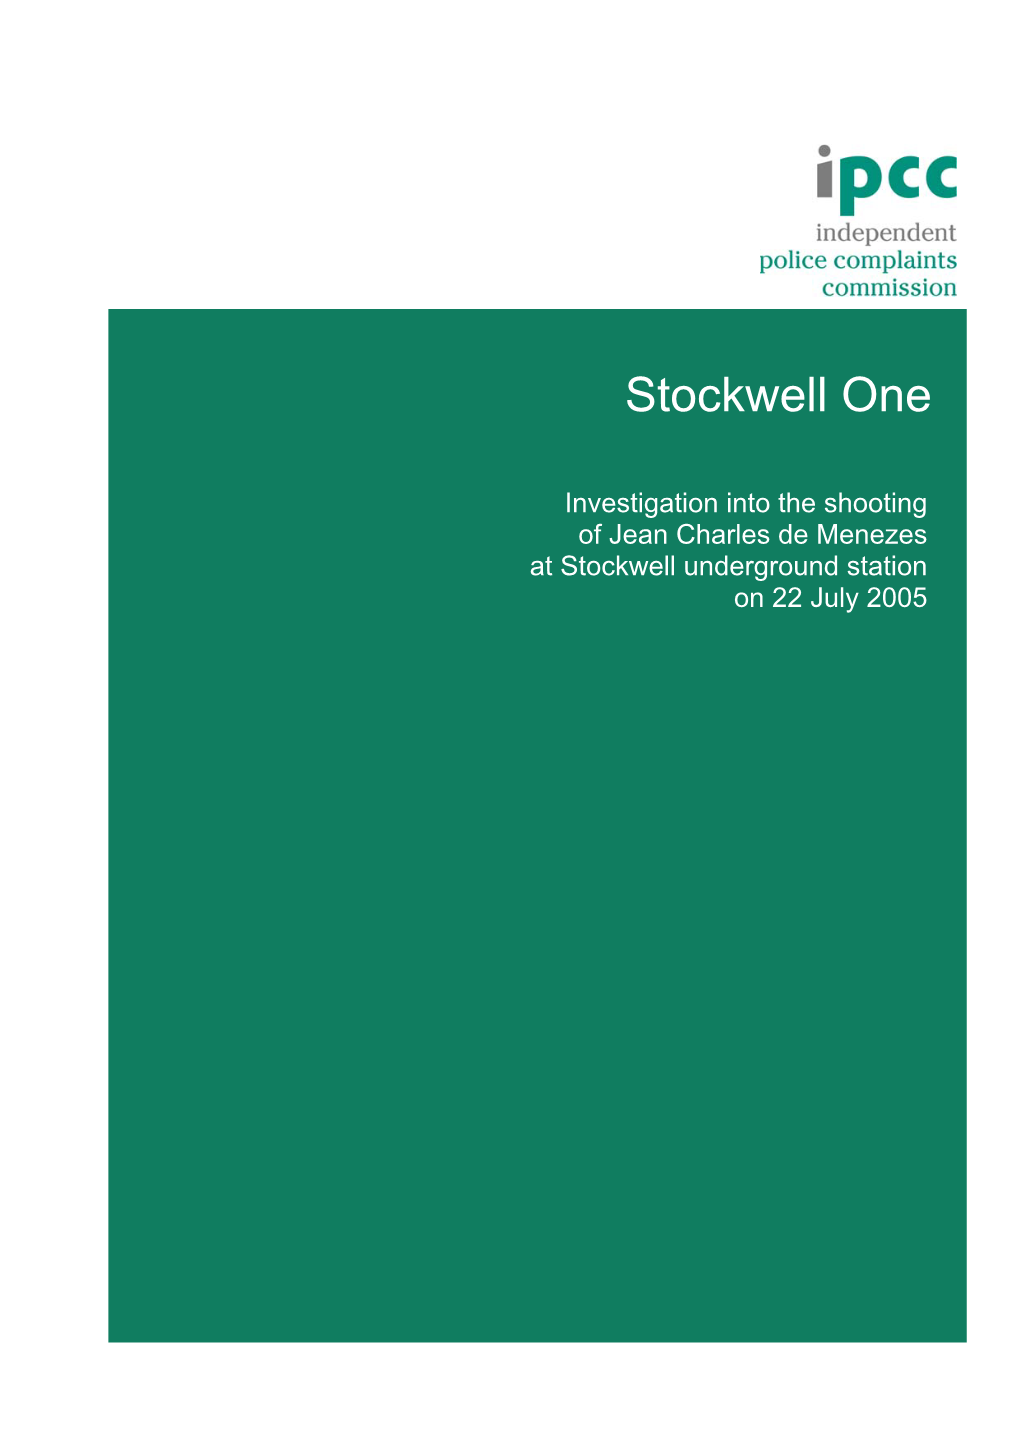 IPCC Stockwell One Report